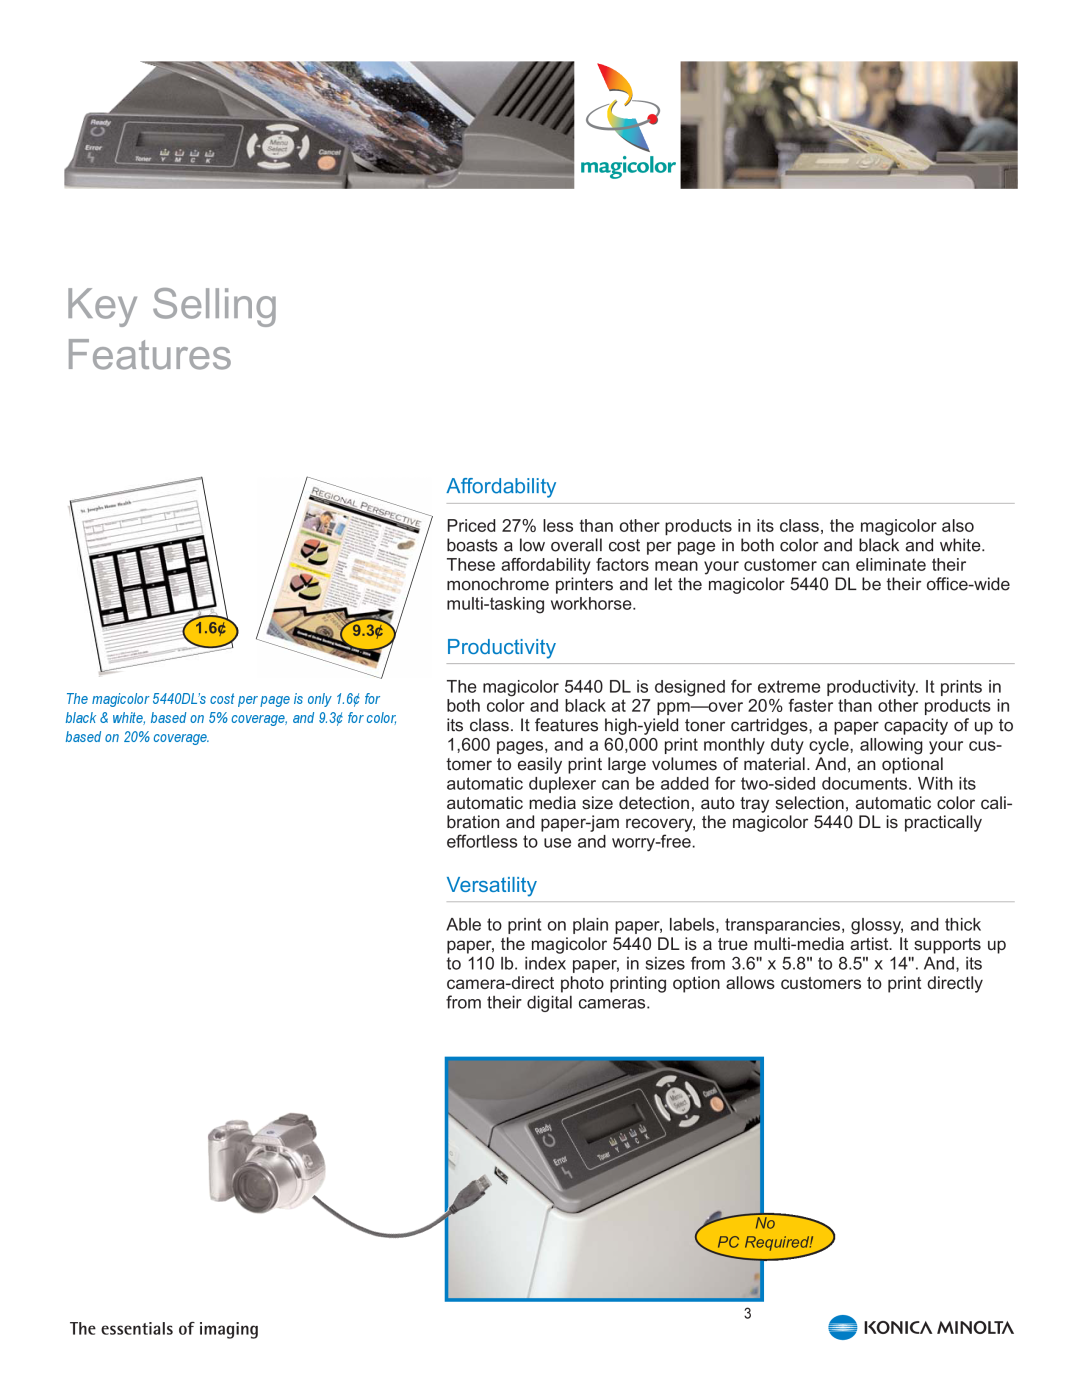 Konica Minolta 5440 DL manual Key Selling Features, Affordability, Productivity, Versatility 